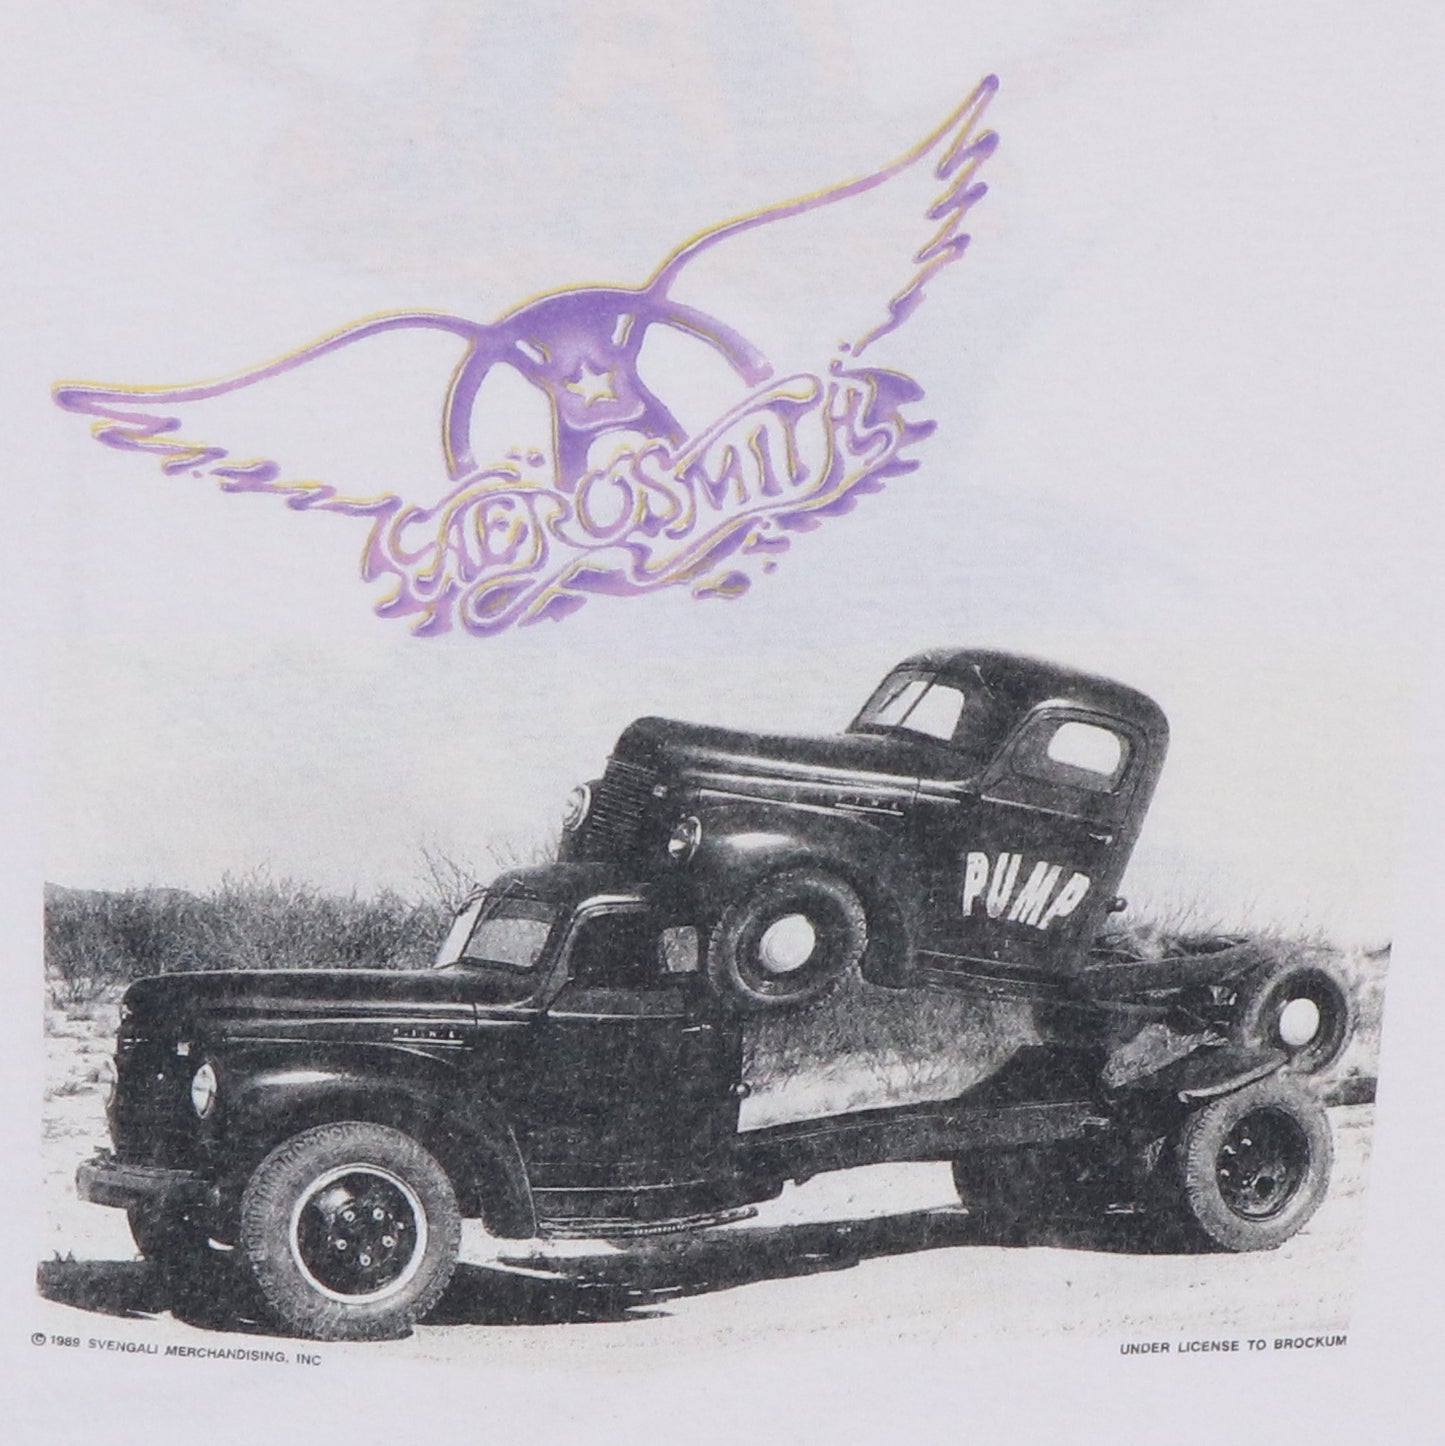 1989 Aerosmith Pump Tour Shirt